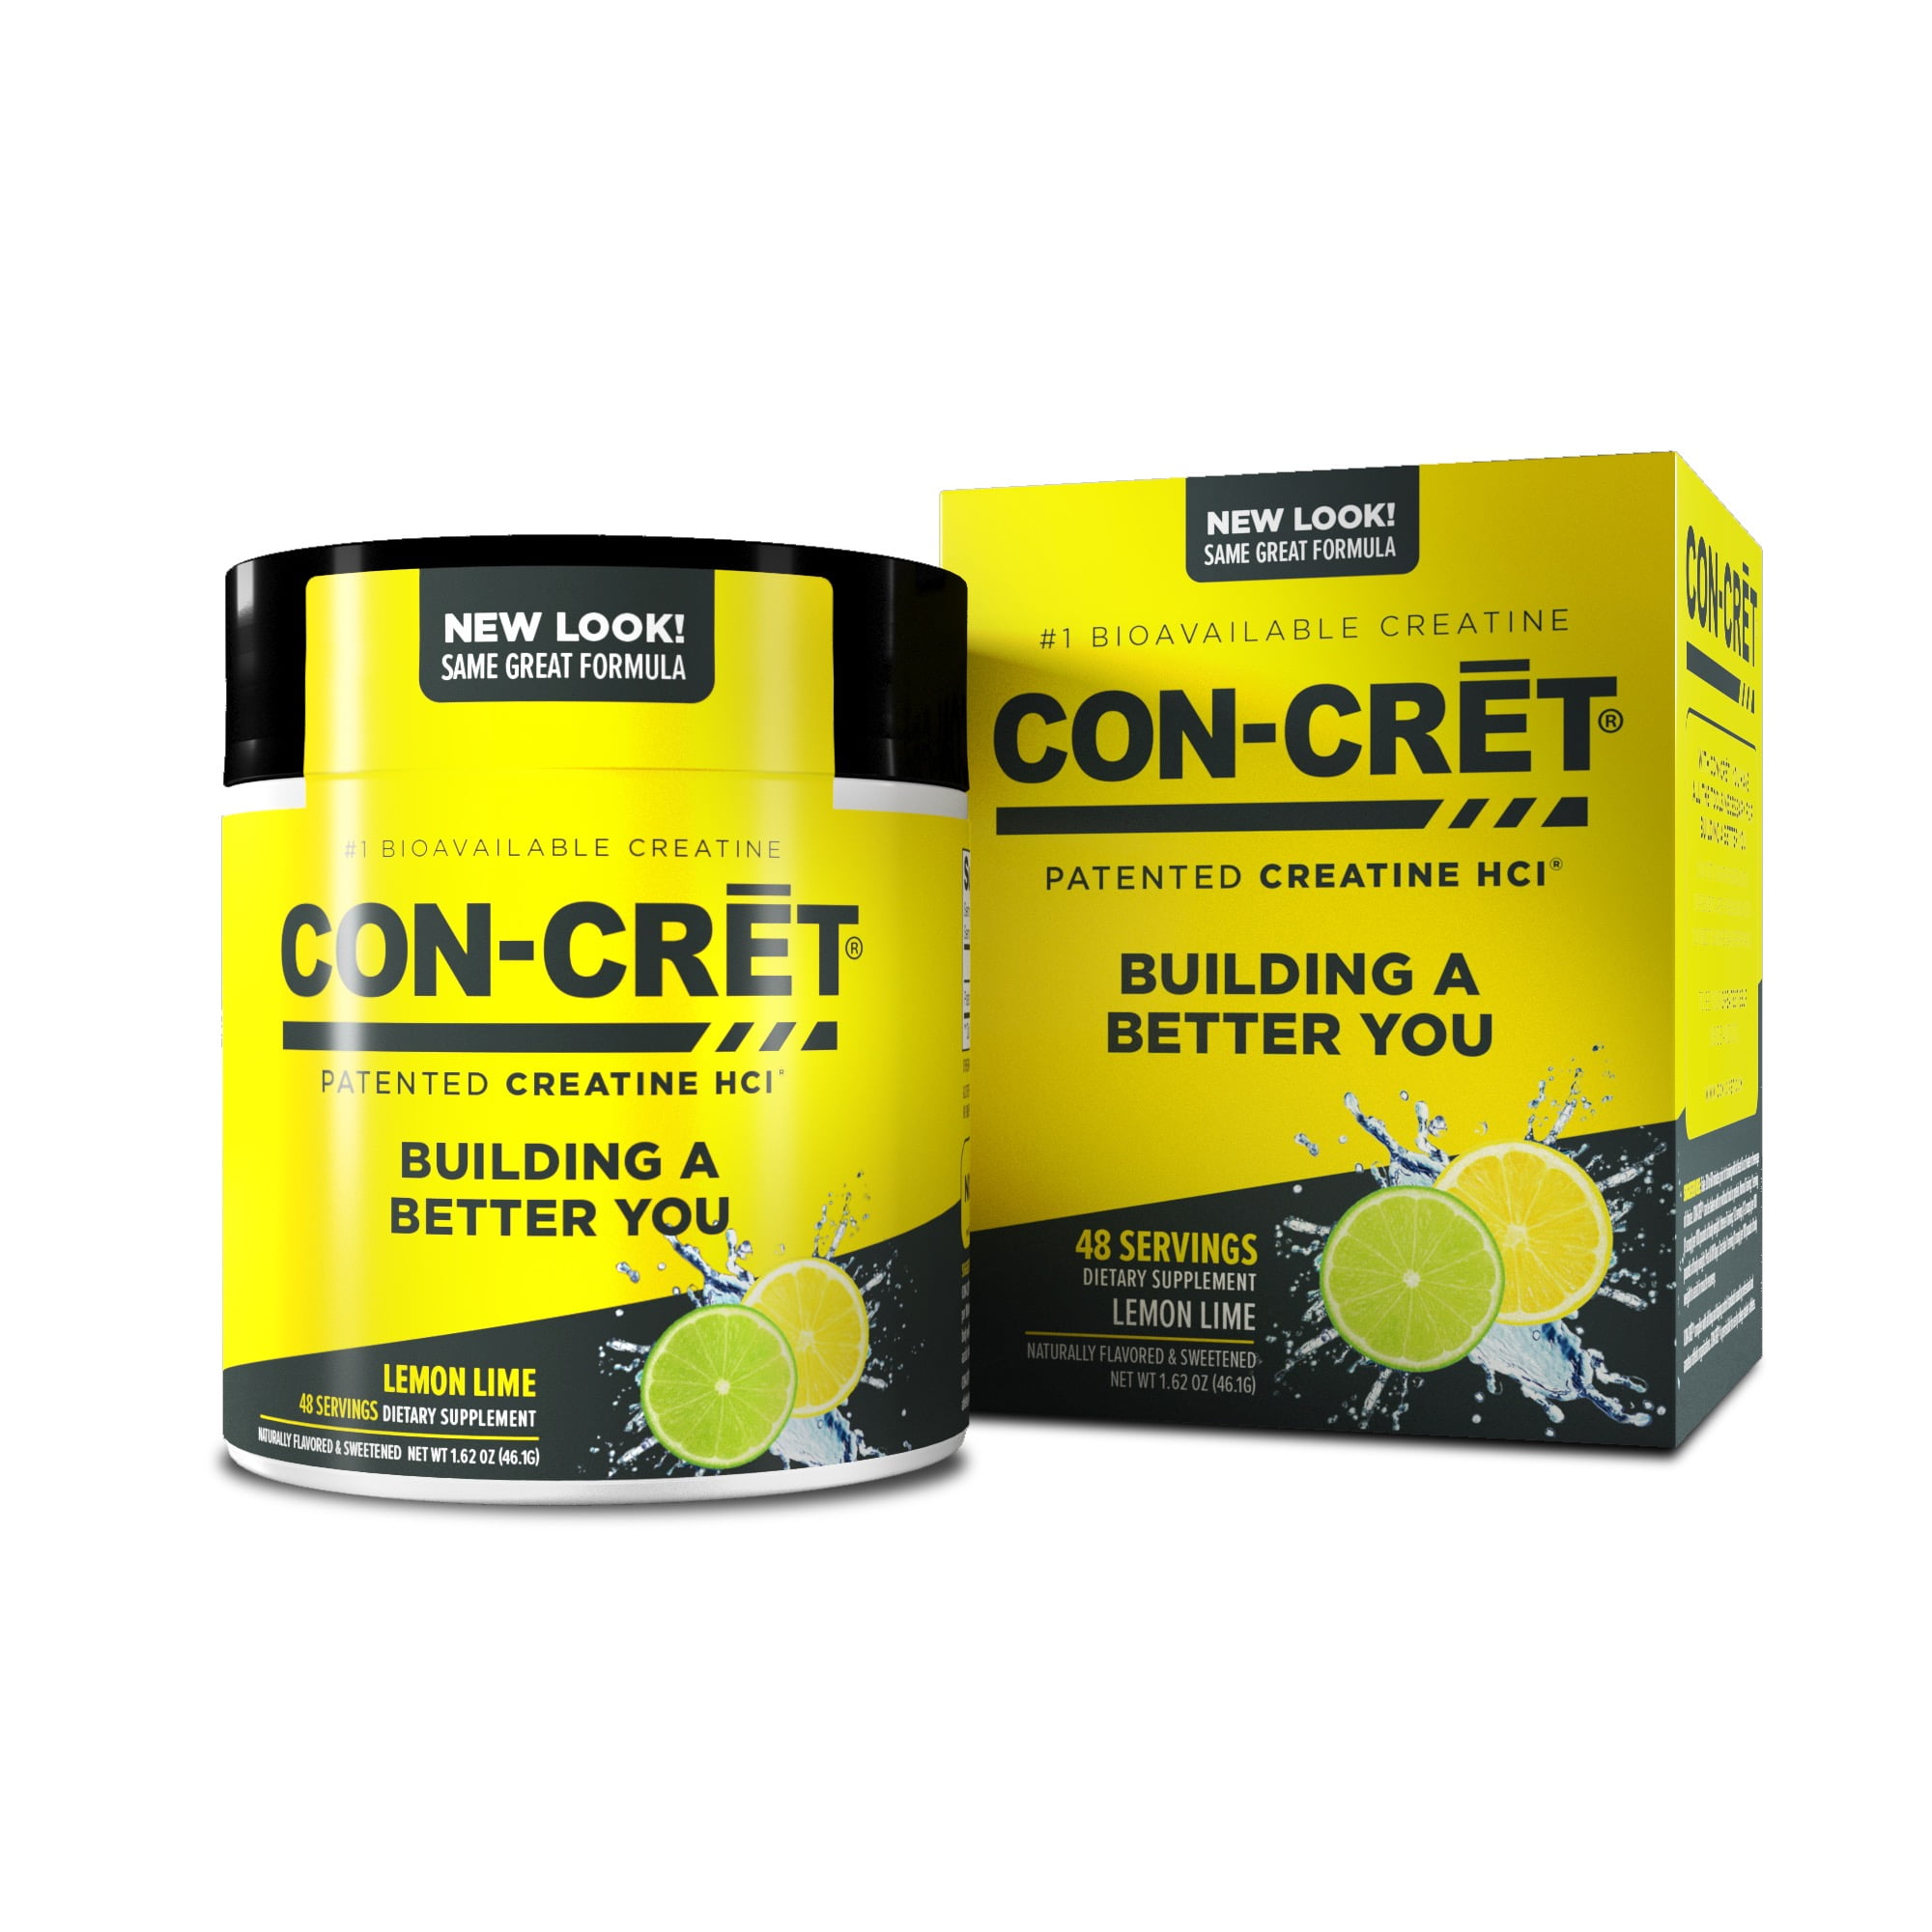 CON-CRET Patented Creatine HCl, Lemon Lime, 48 Servings